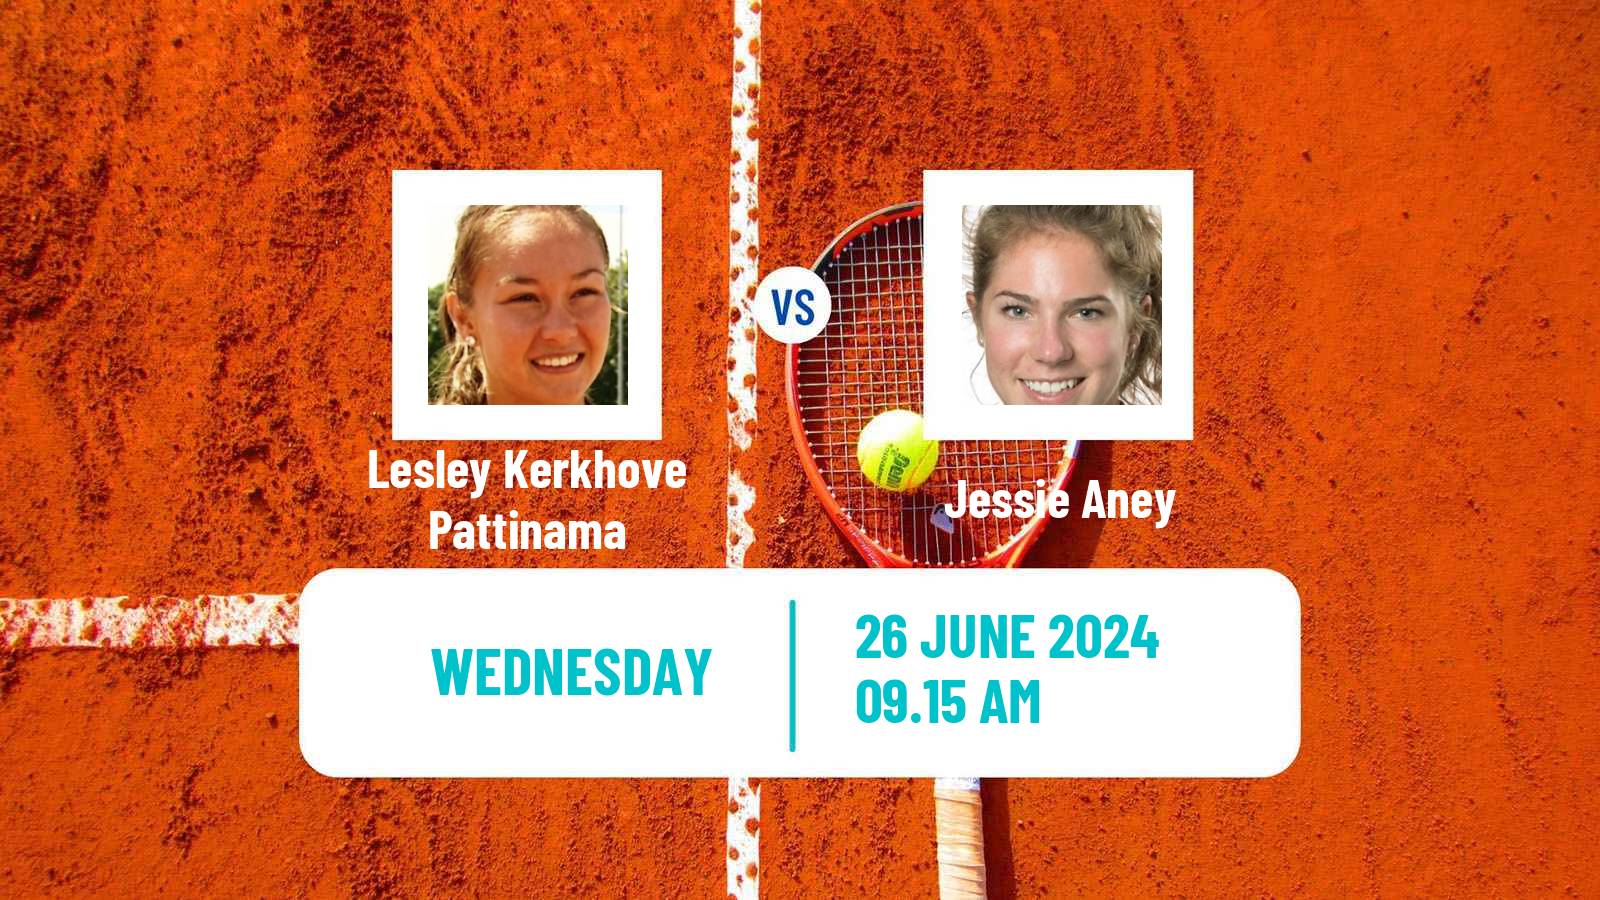 Tennis ITF W75 Doksy Stare Splavy Women Lesley Kerkhove Pattinama - Jessie Aney